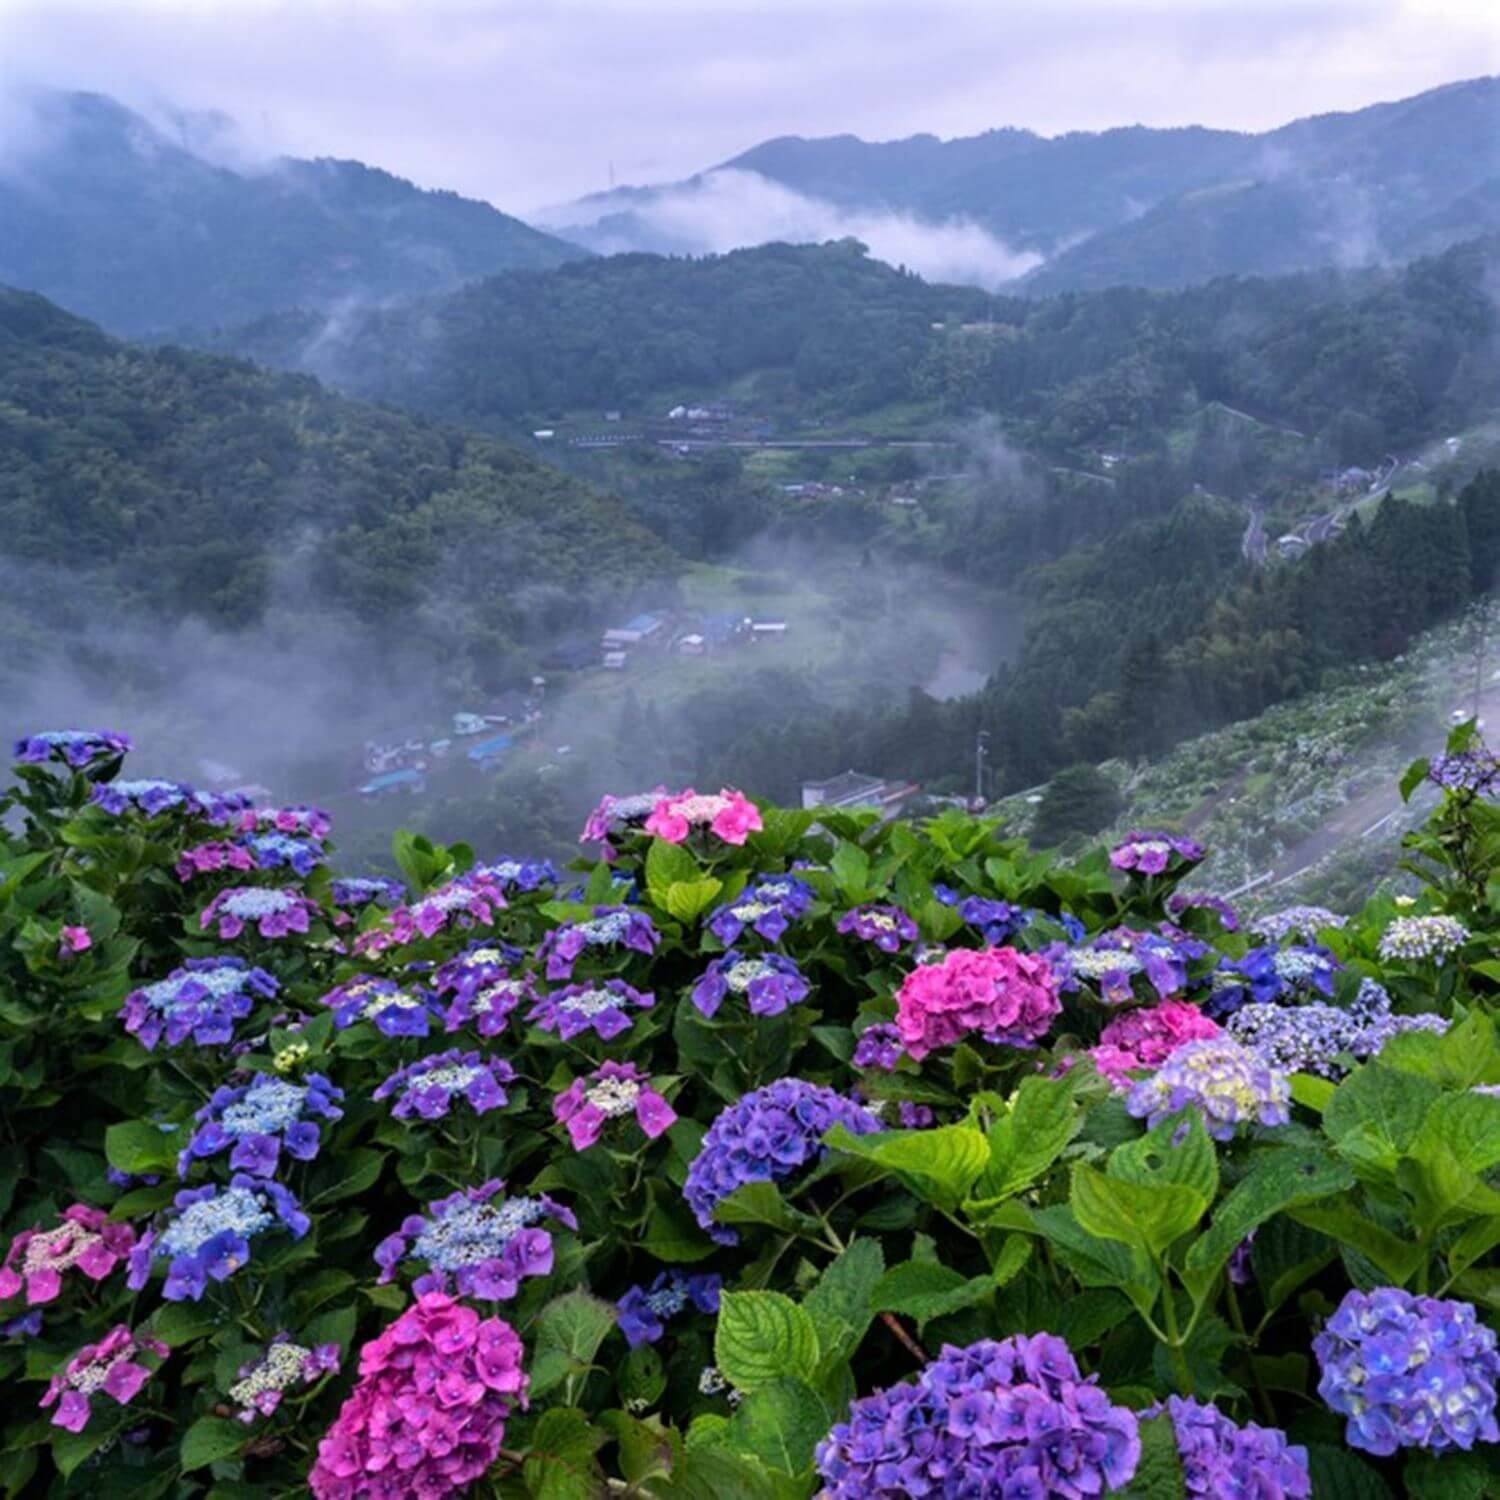 Hydrangeas beautifully blooming during the rainy season = Shutterstock 4